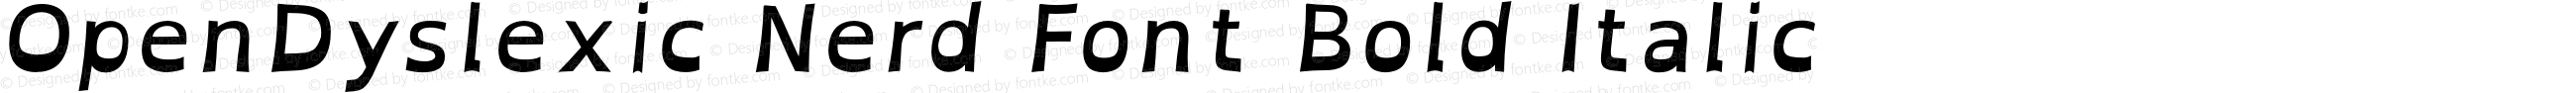 OpenDyslexic Bold Italic Nerd Font Complete